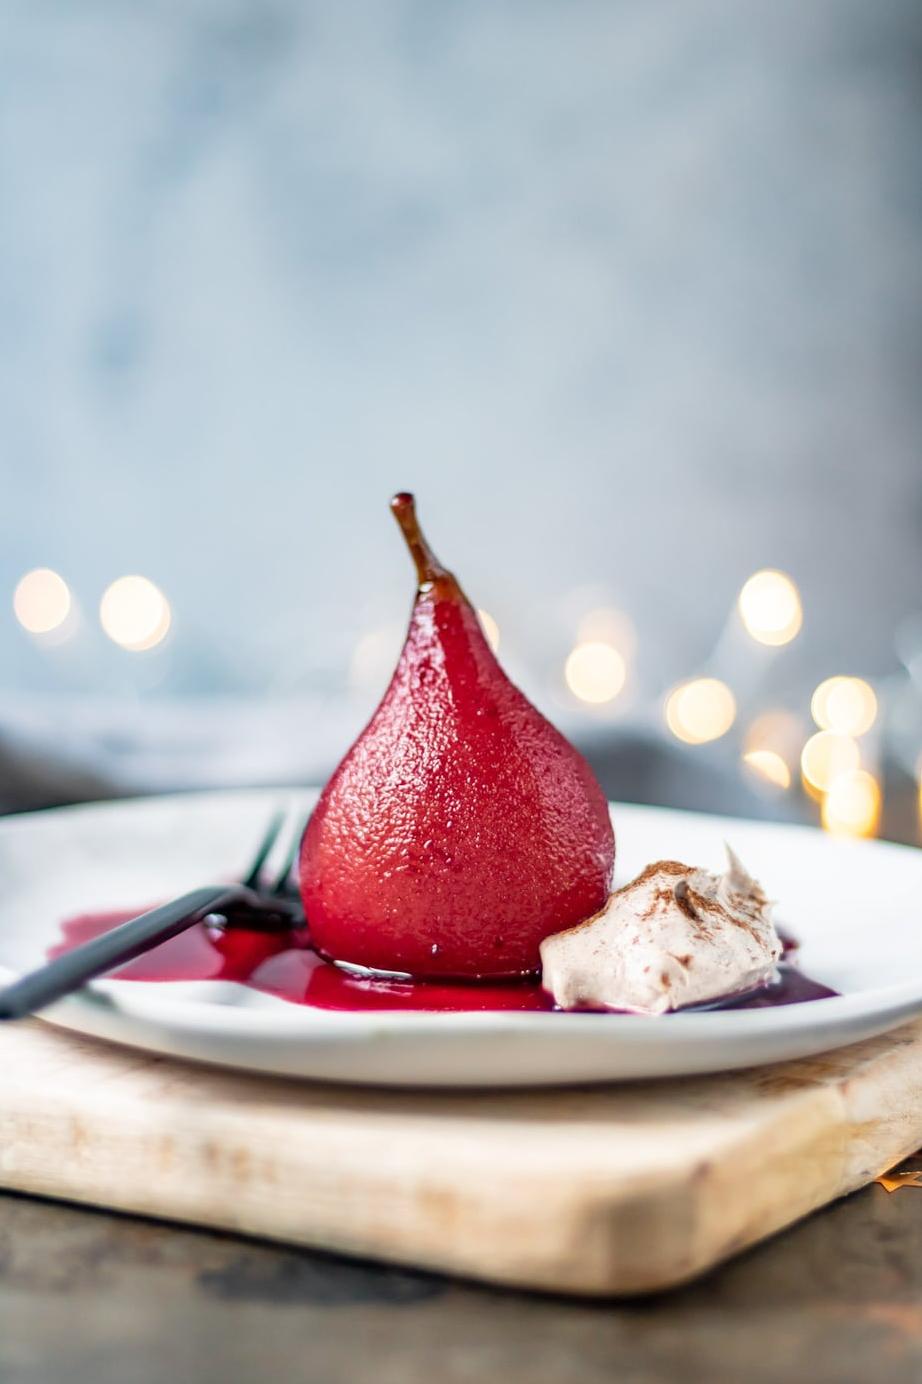  When pears meet spiced wine, magic happens.